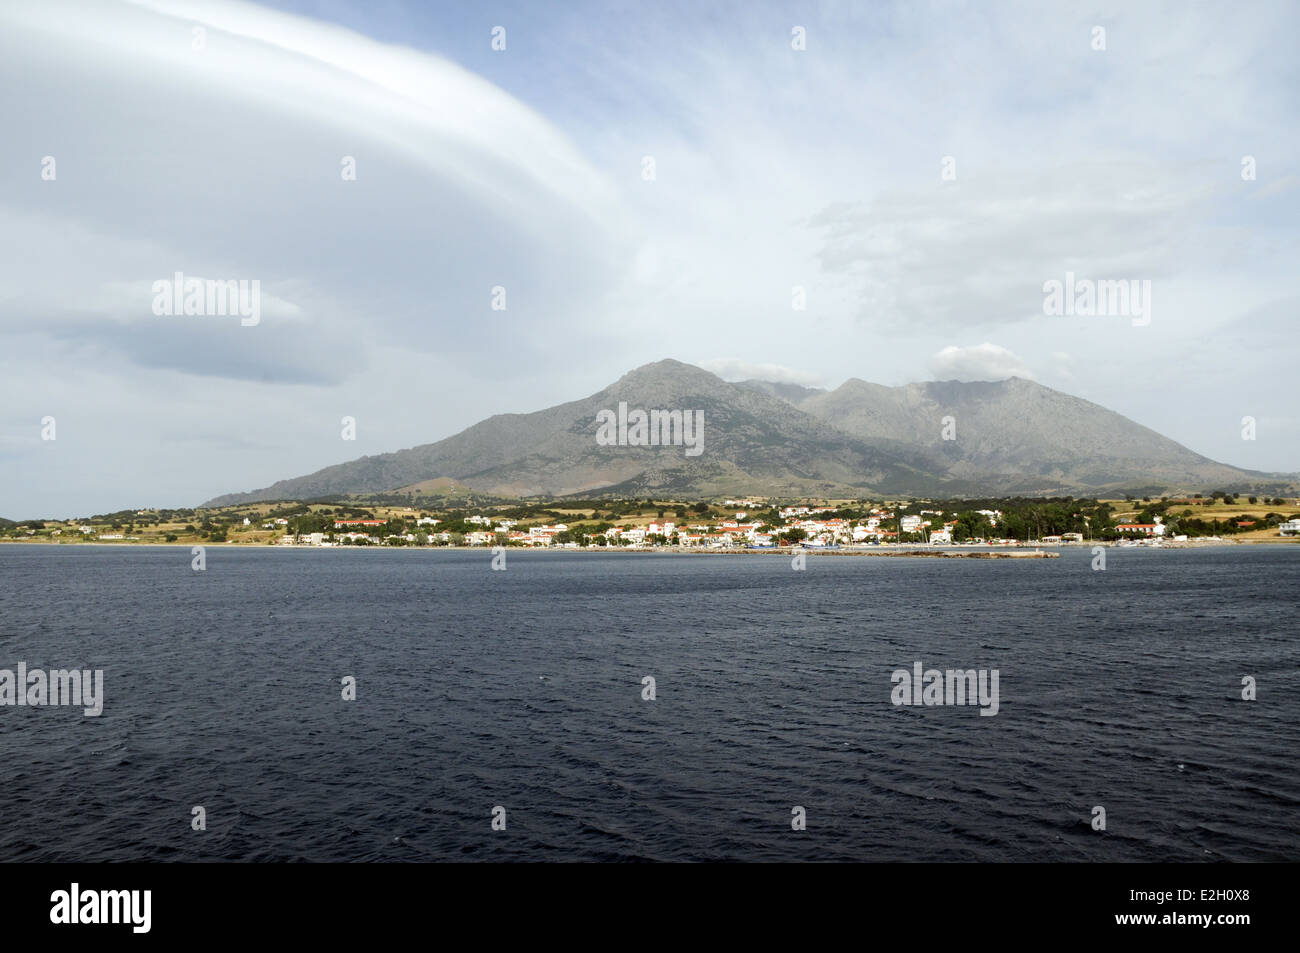 The port town of Kamariotissa on the Greek island of Samothraki, located in the Thracian Sea in the North Aegean, Greece. Stock Photo